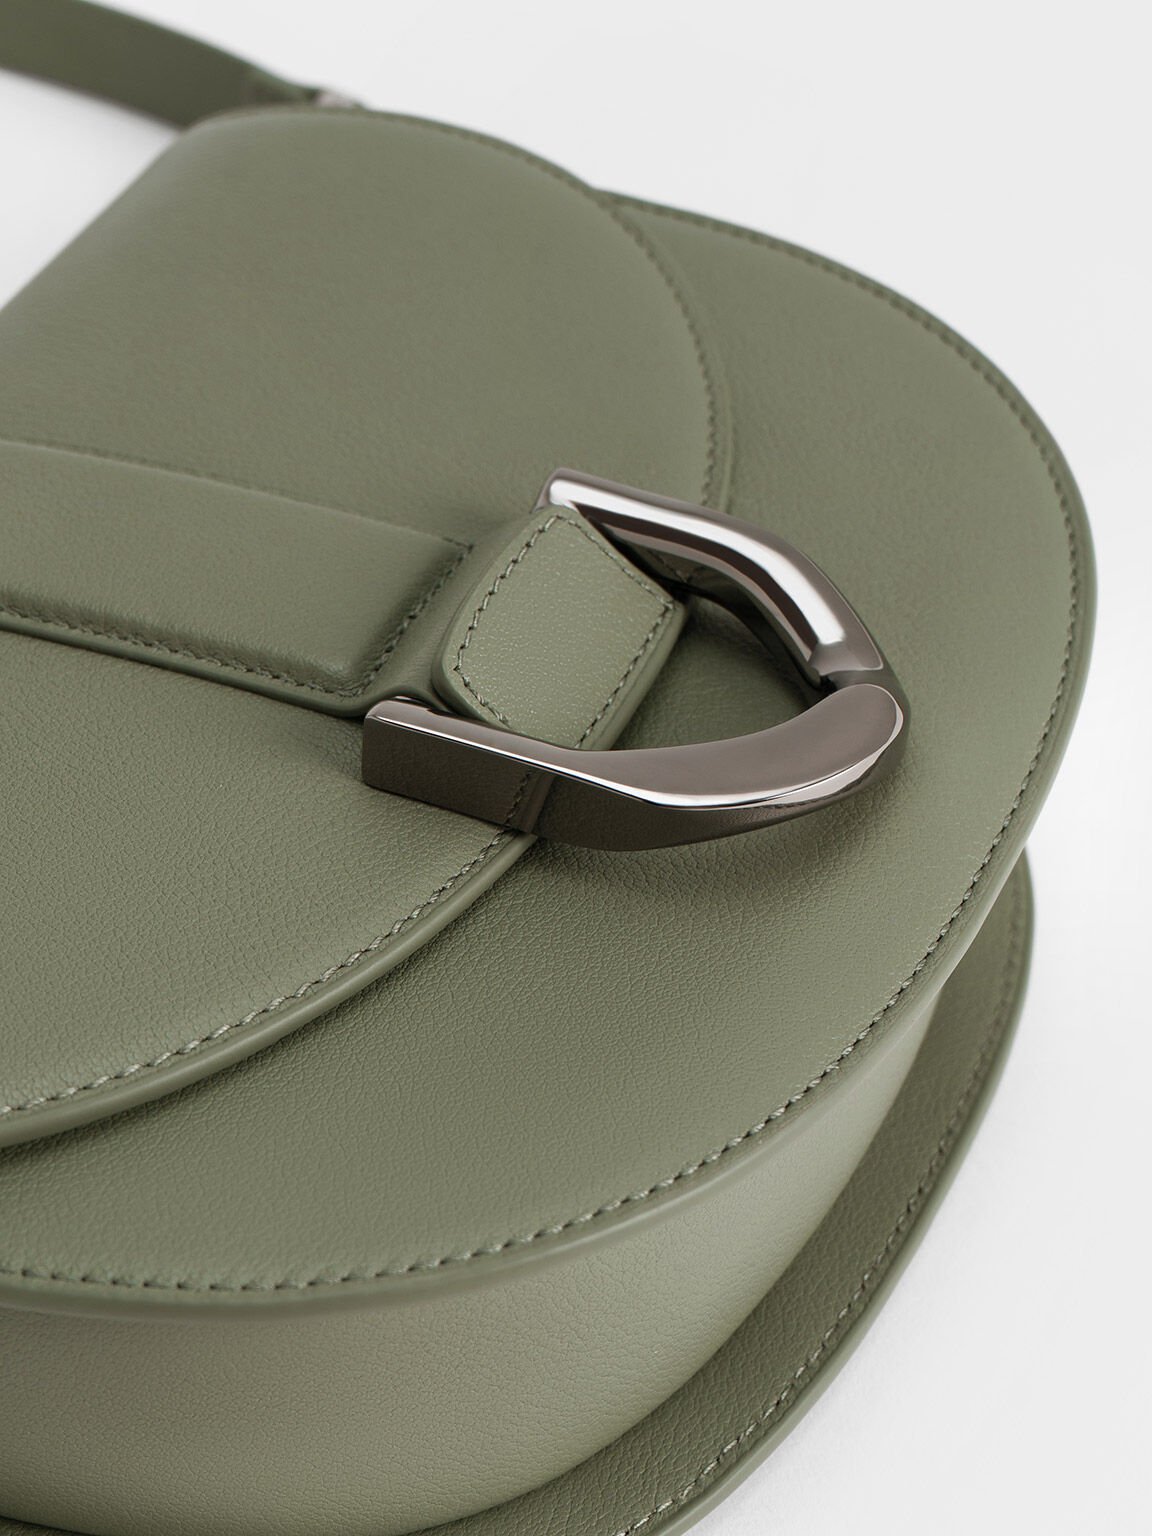 Women’s Gabine leather saddle bag in sage green - CHARLES & KEITH